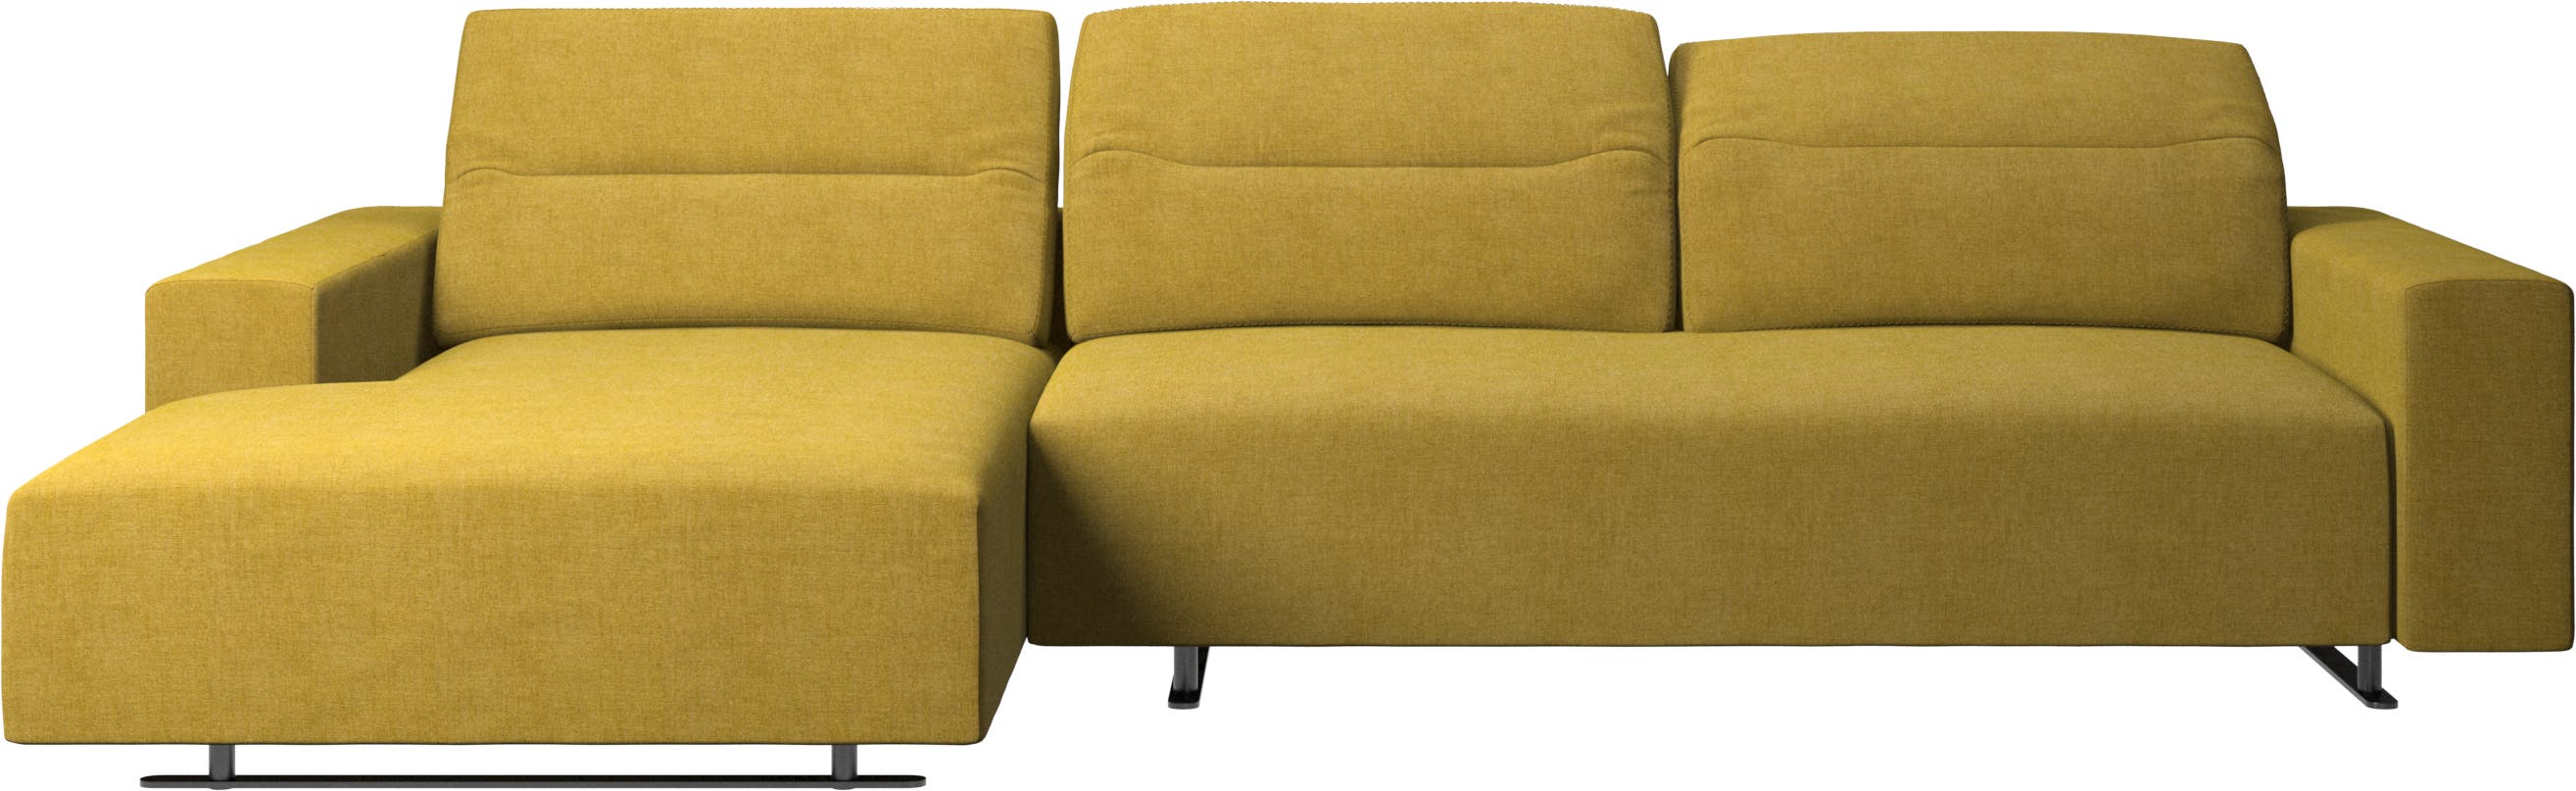 kαναπές Hampton με ρυθμιζόμενη πλάτη, μονάδα resting και αποθηκευτικό χώρο στις δύο πλευρές